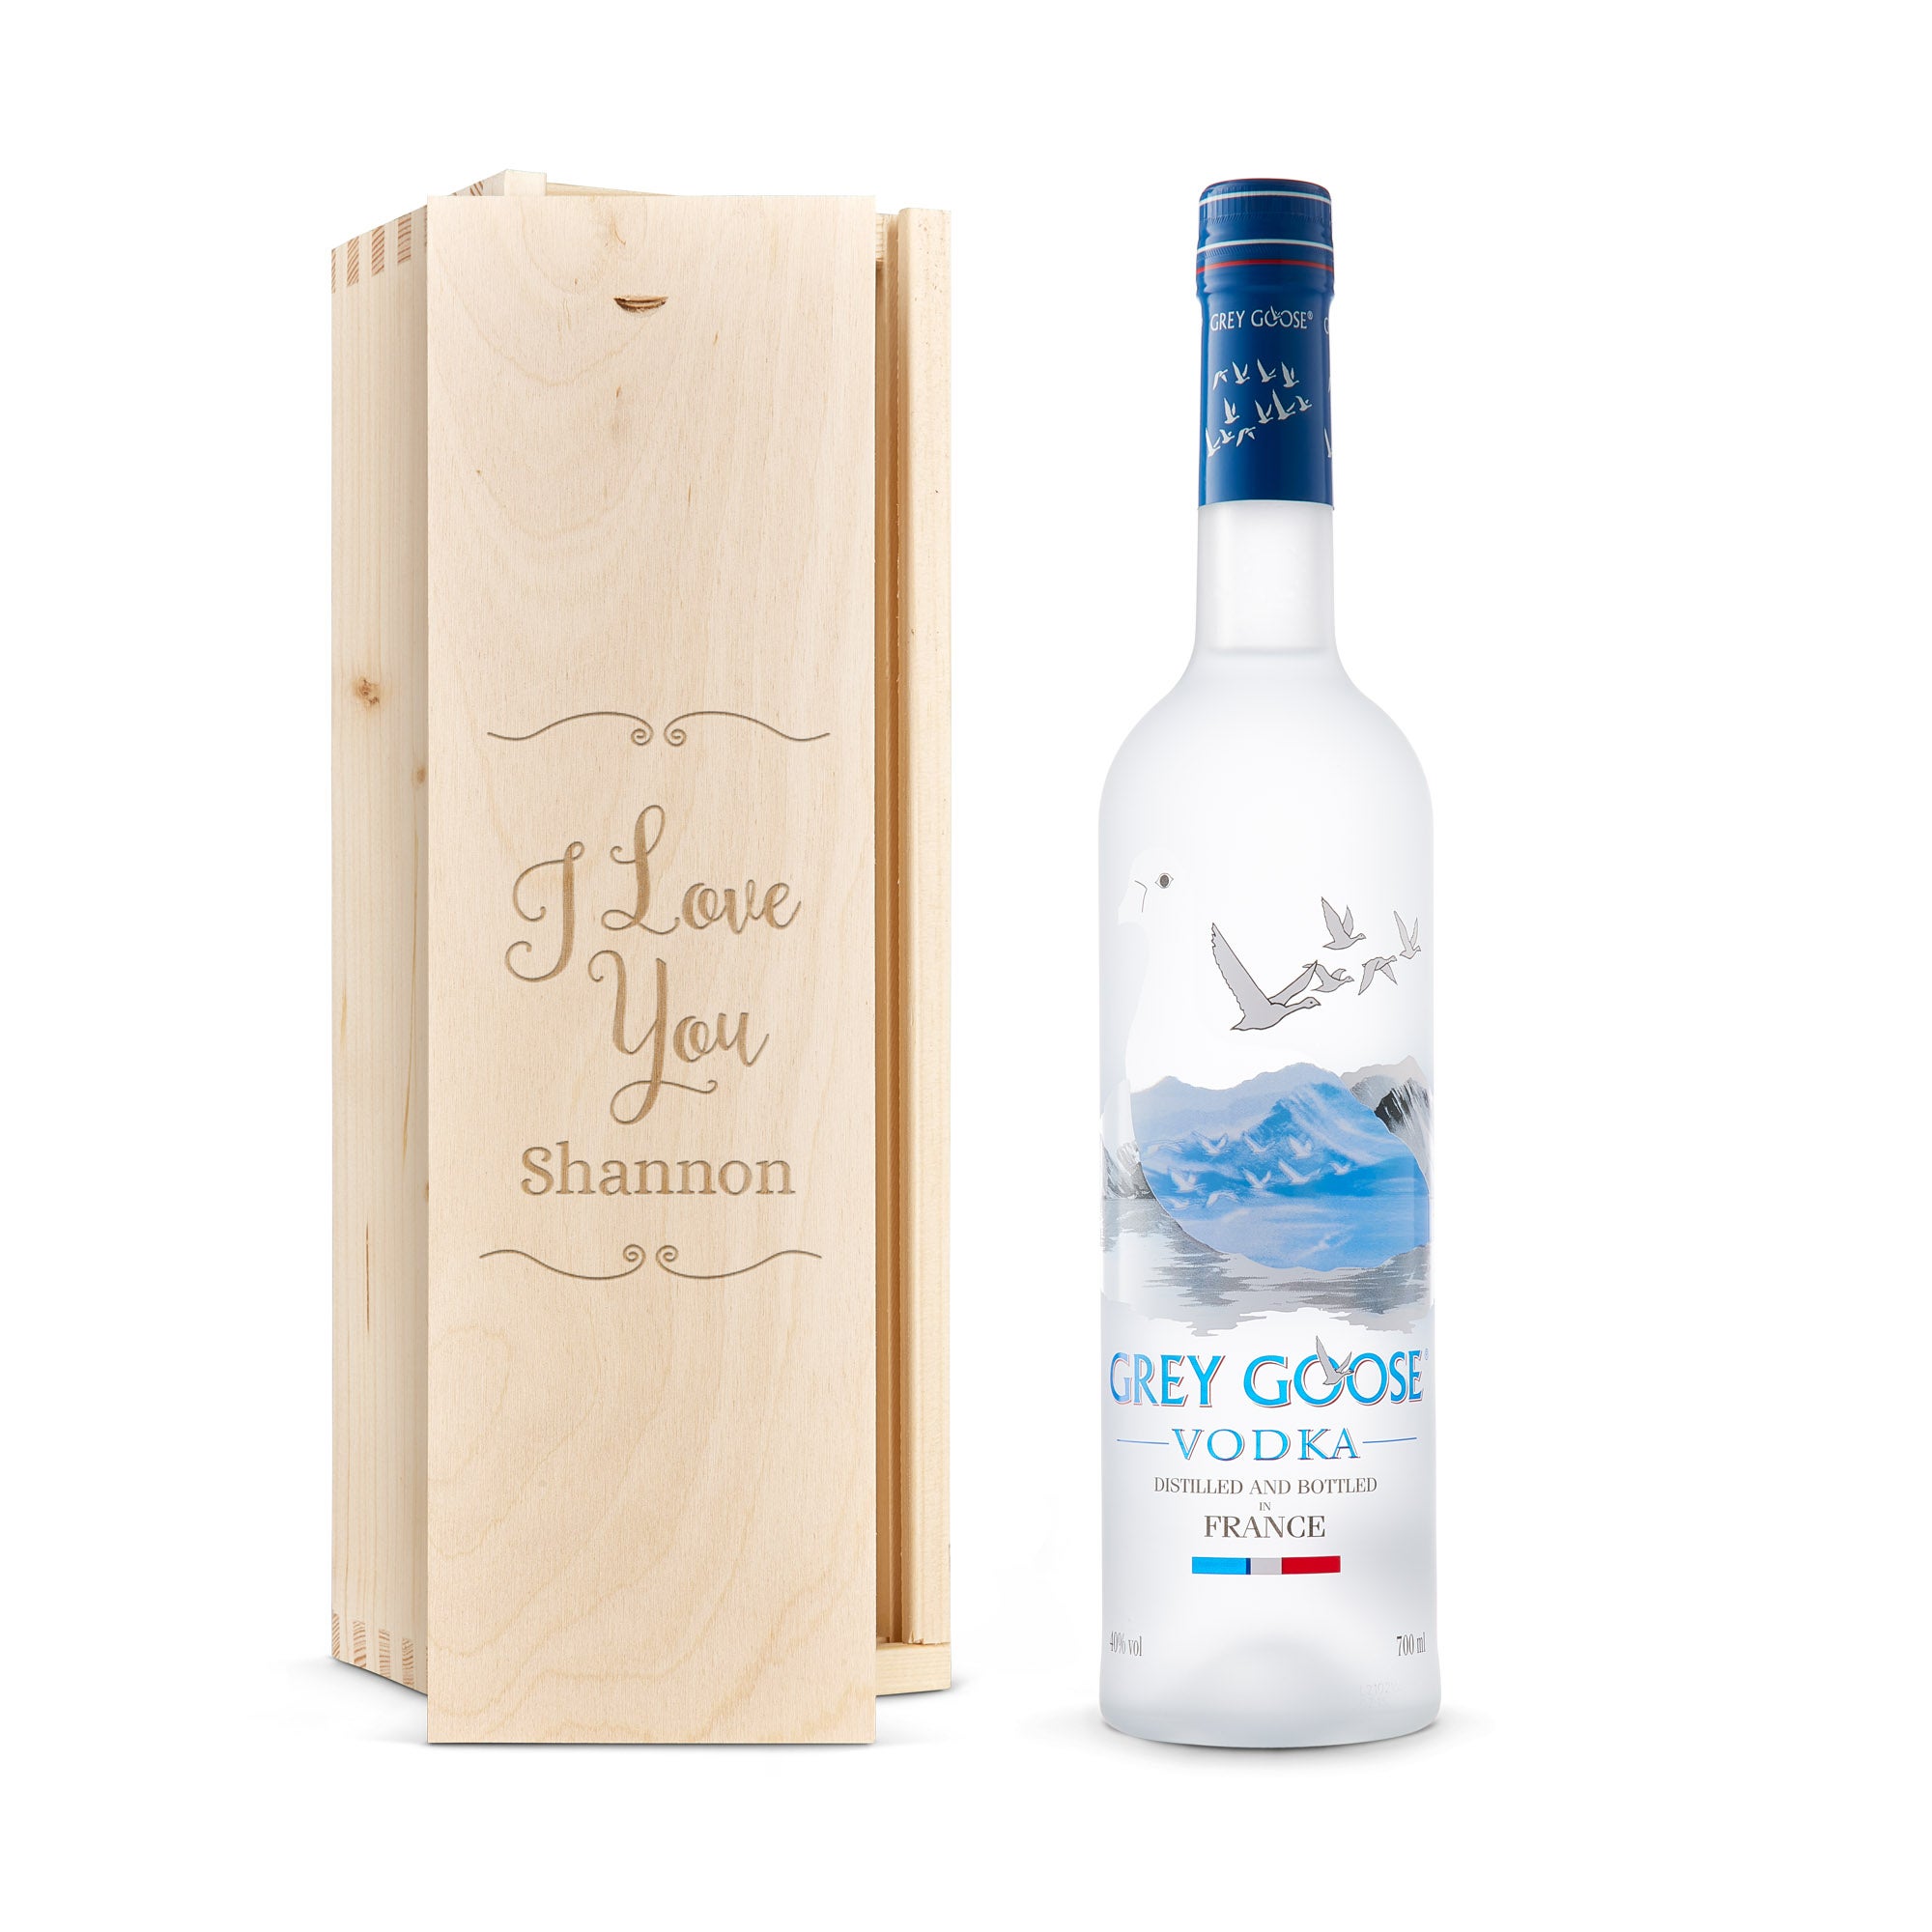 Personalised vodka gift - Grey Goose - Engraved wooden case